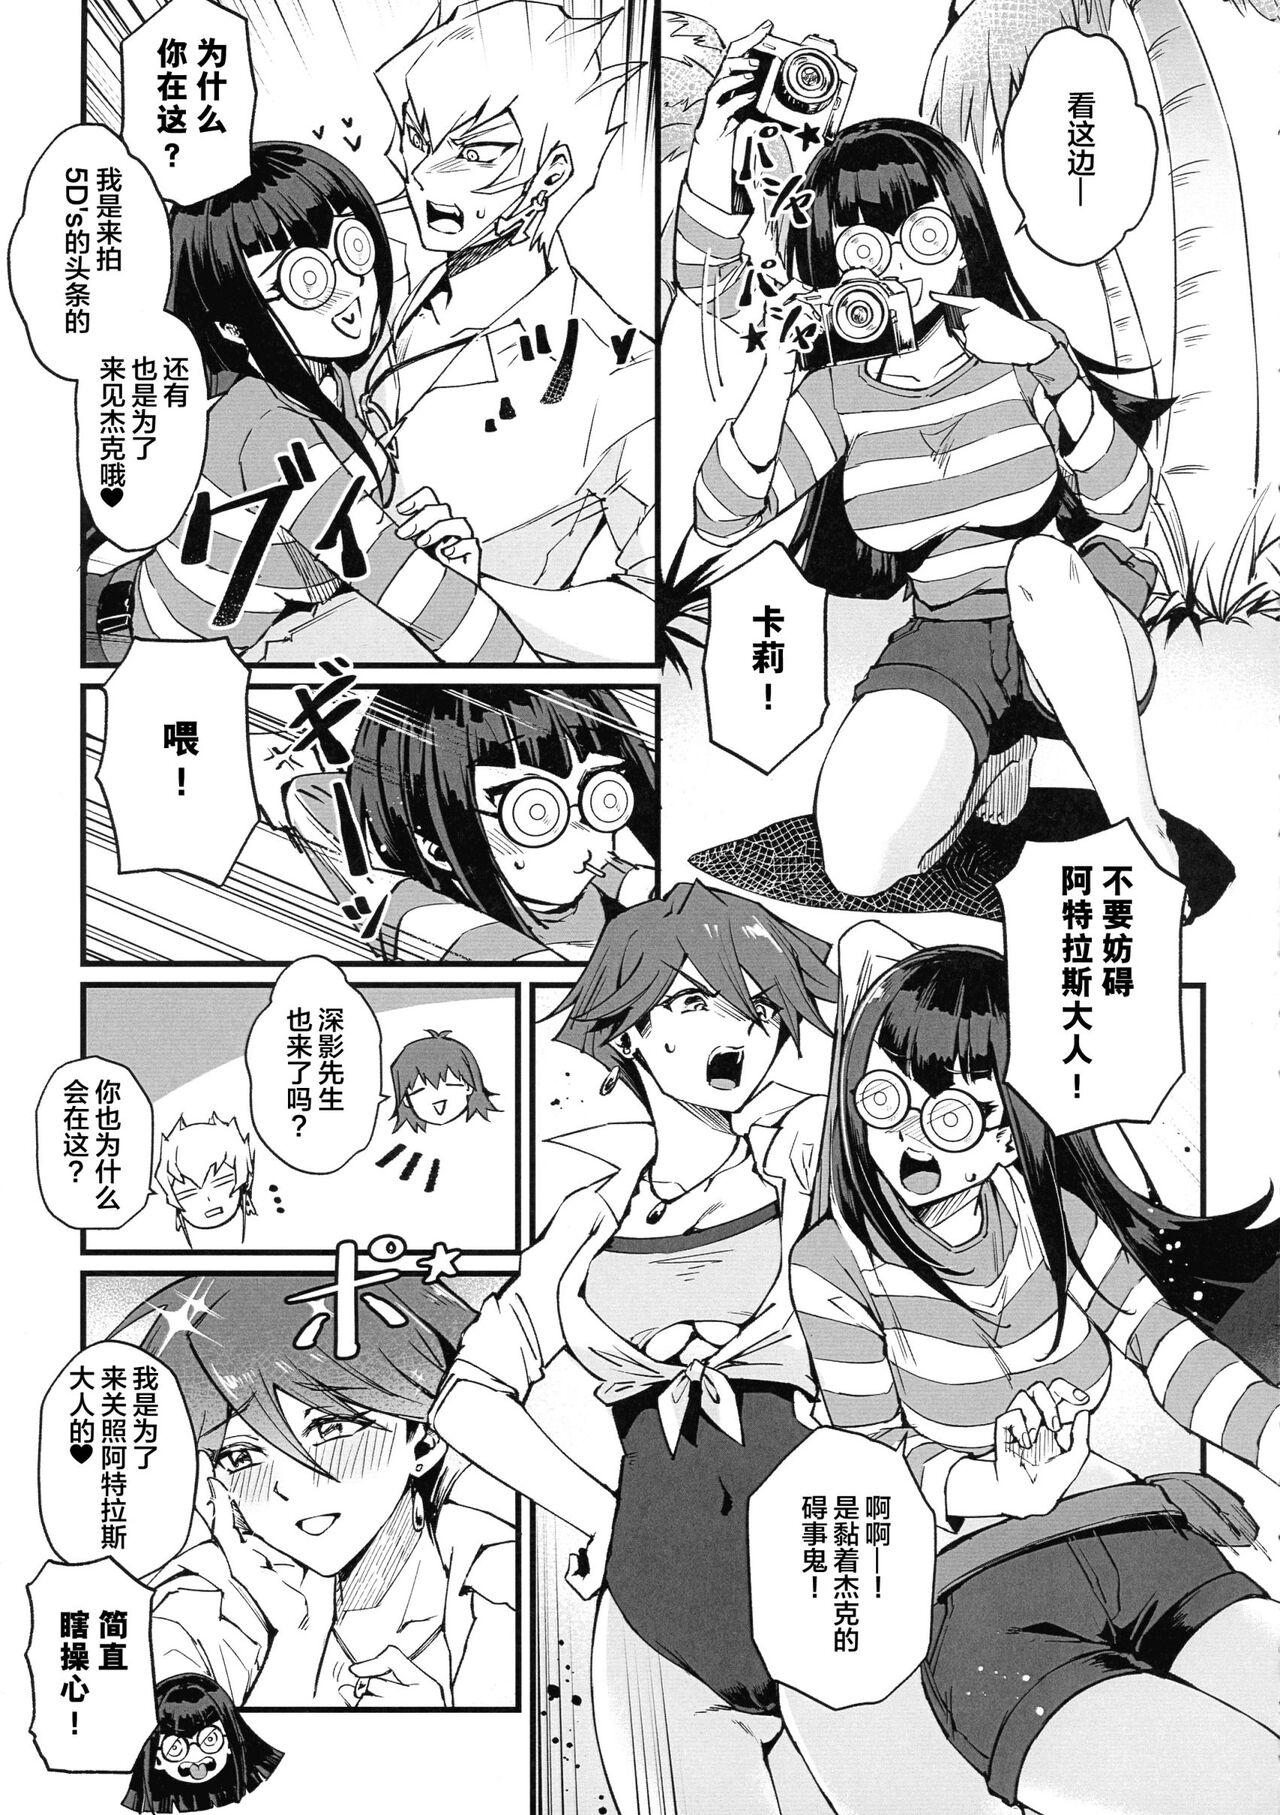 Stranger Samakani - Yu-gi-oh 5ds People Having Sex - Page 5